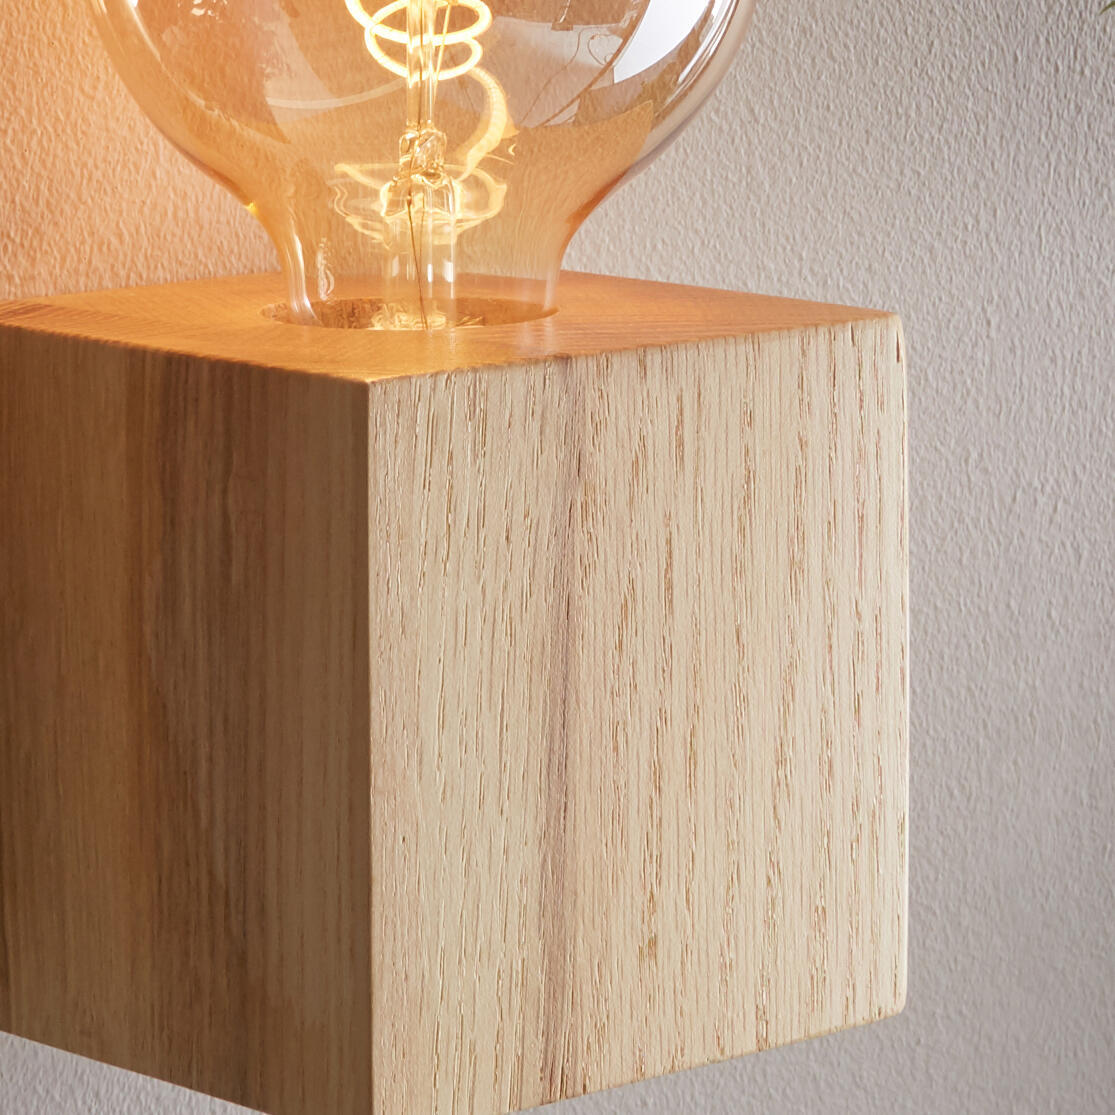 Applique scandinavo Blok marrone, in legno, 10 x 10 cm, INSPIRE - 3